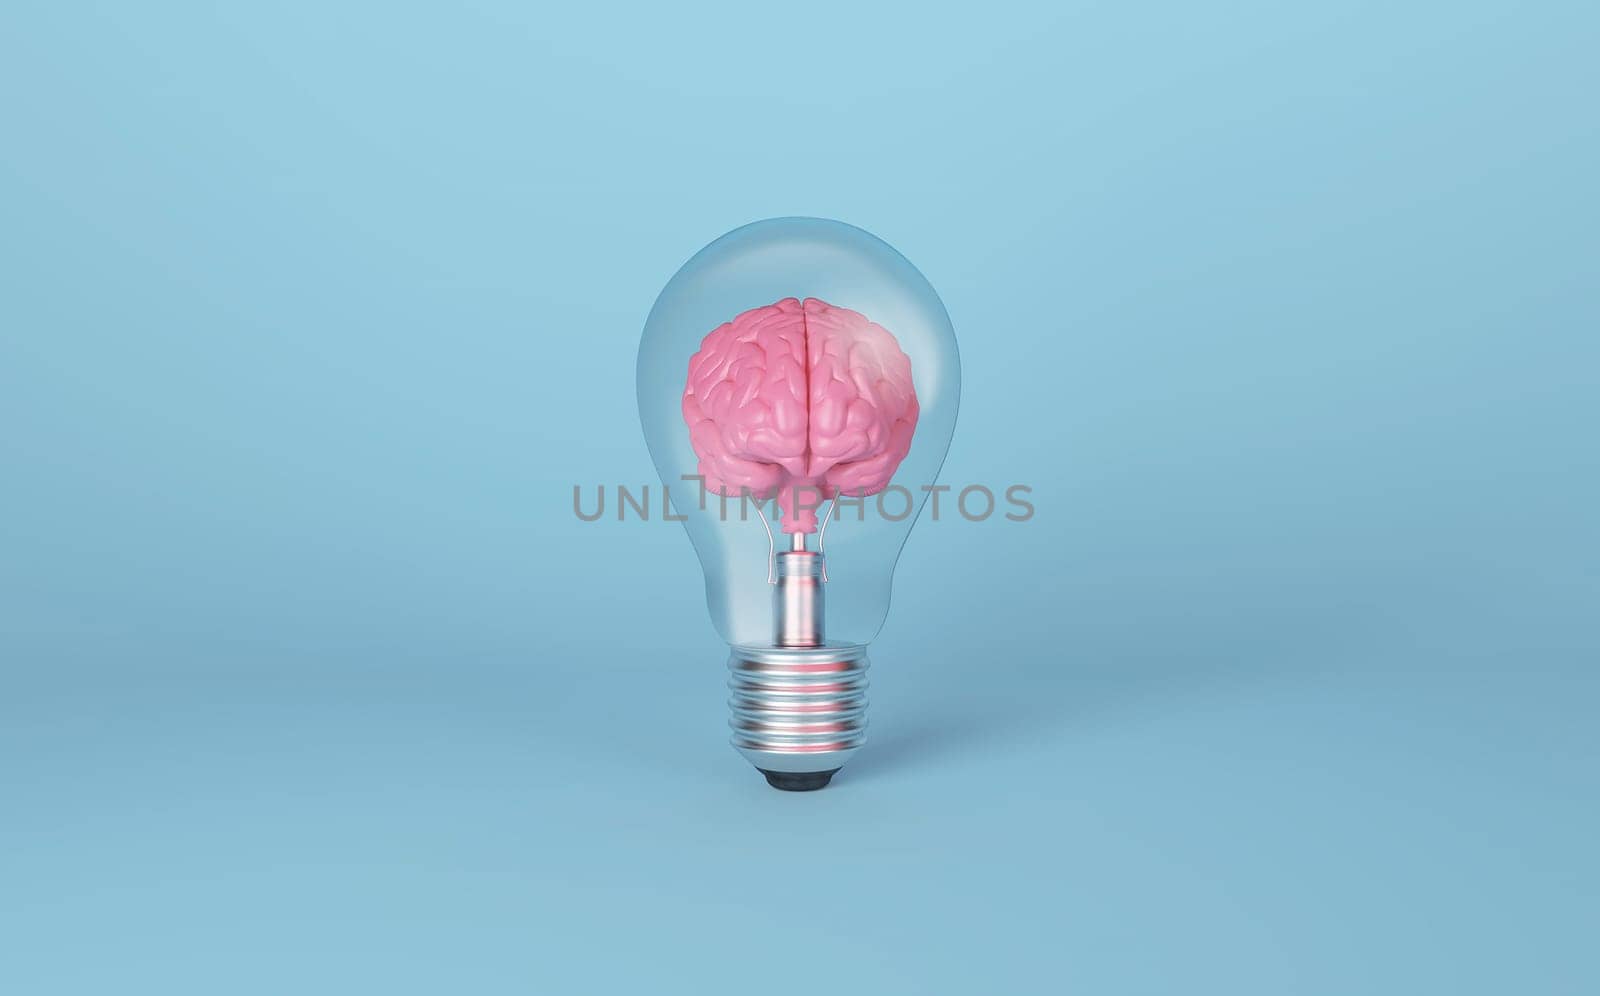 Brain on light bulb on blue background. Concept of inspiration, creativity, idea, innovation. 3D rendering.